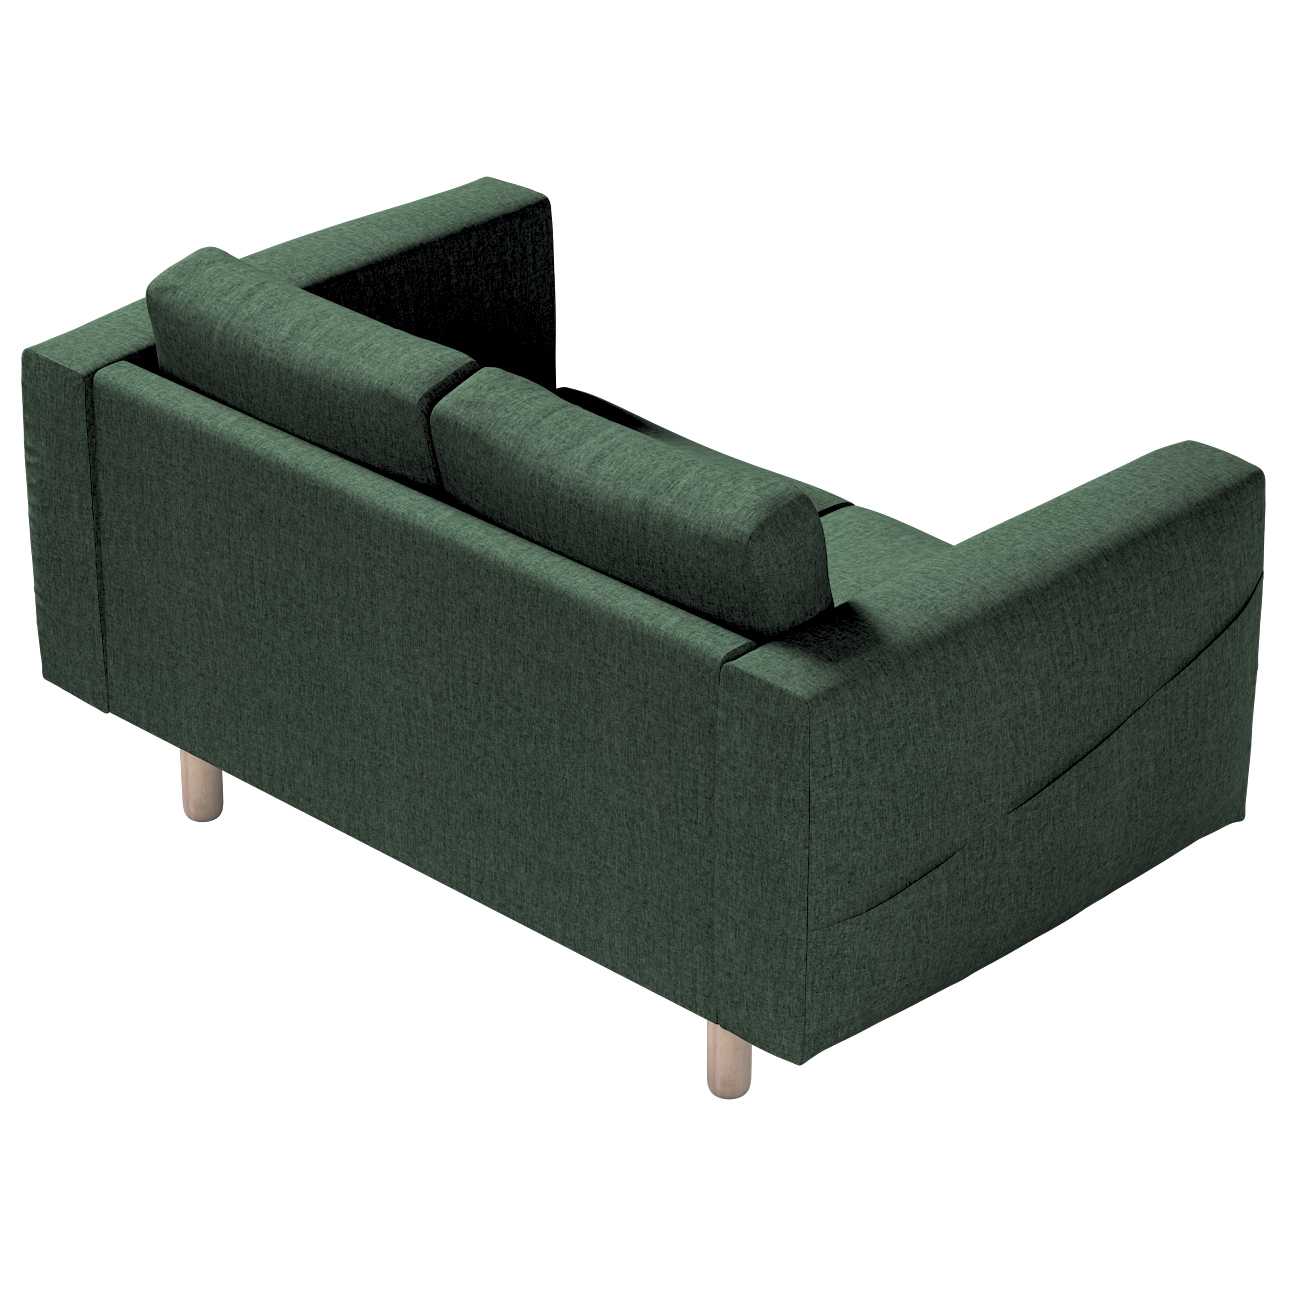 Bezug für Norsborg 2-Sitzer Sofa, dunkelgrün, Norsborg 2-Sitzer Sofabezug, günstig online kaufen